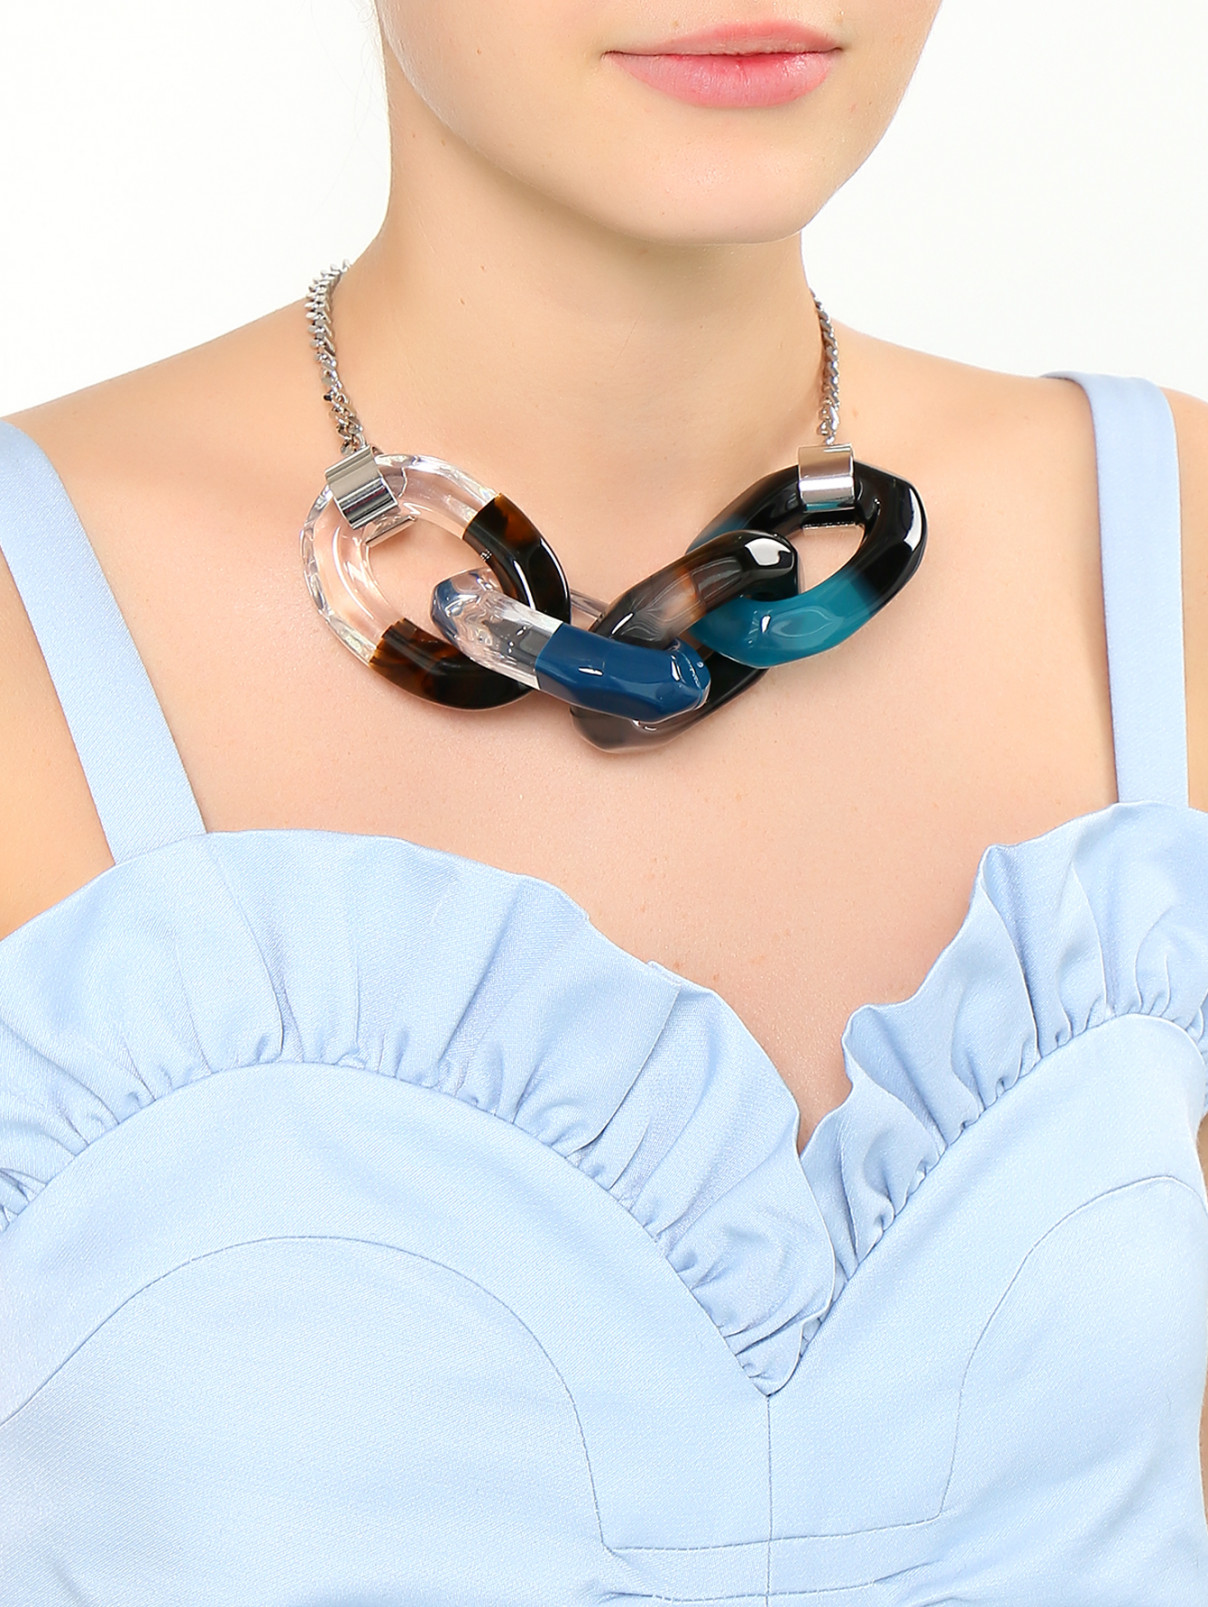 Ожерелье со звеньями Sportmax  –  Модель Общий вид  – Цвет:  Синий